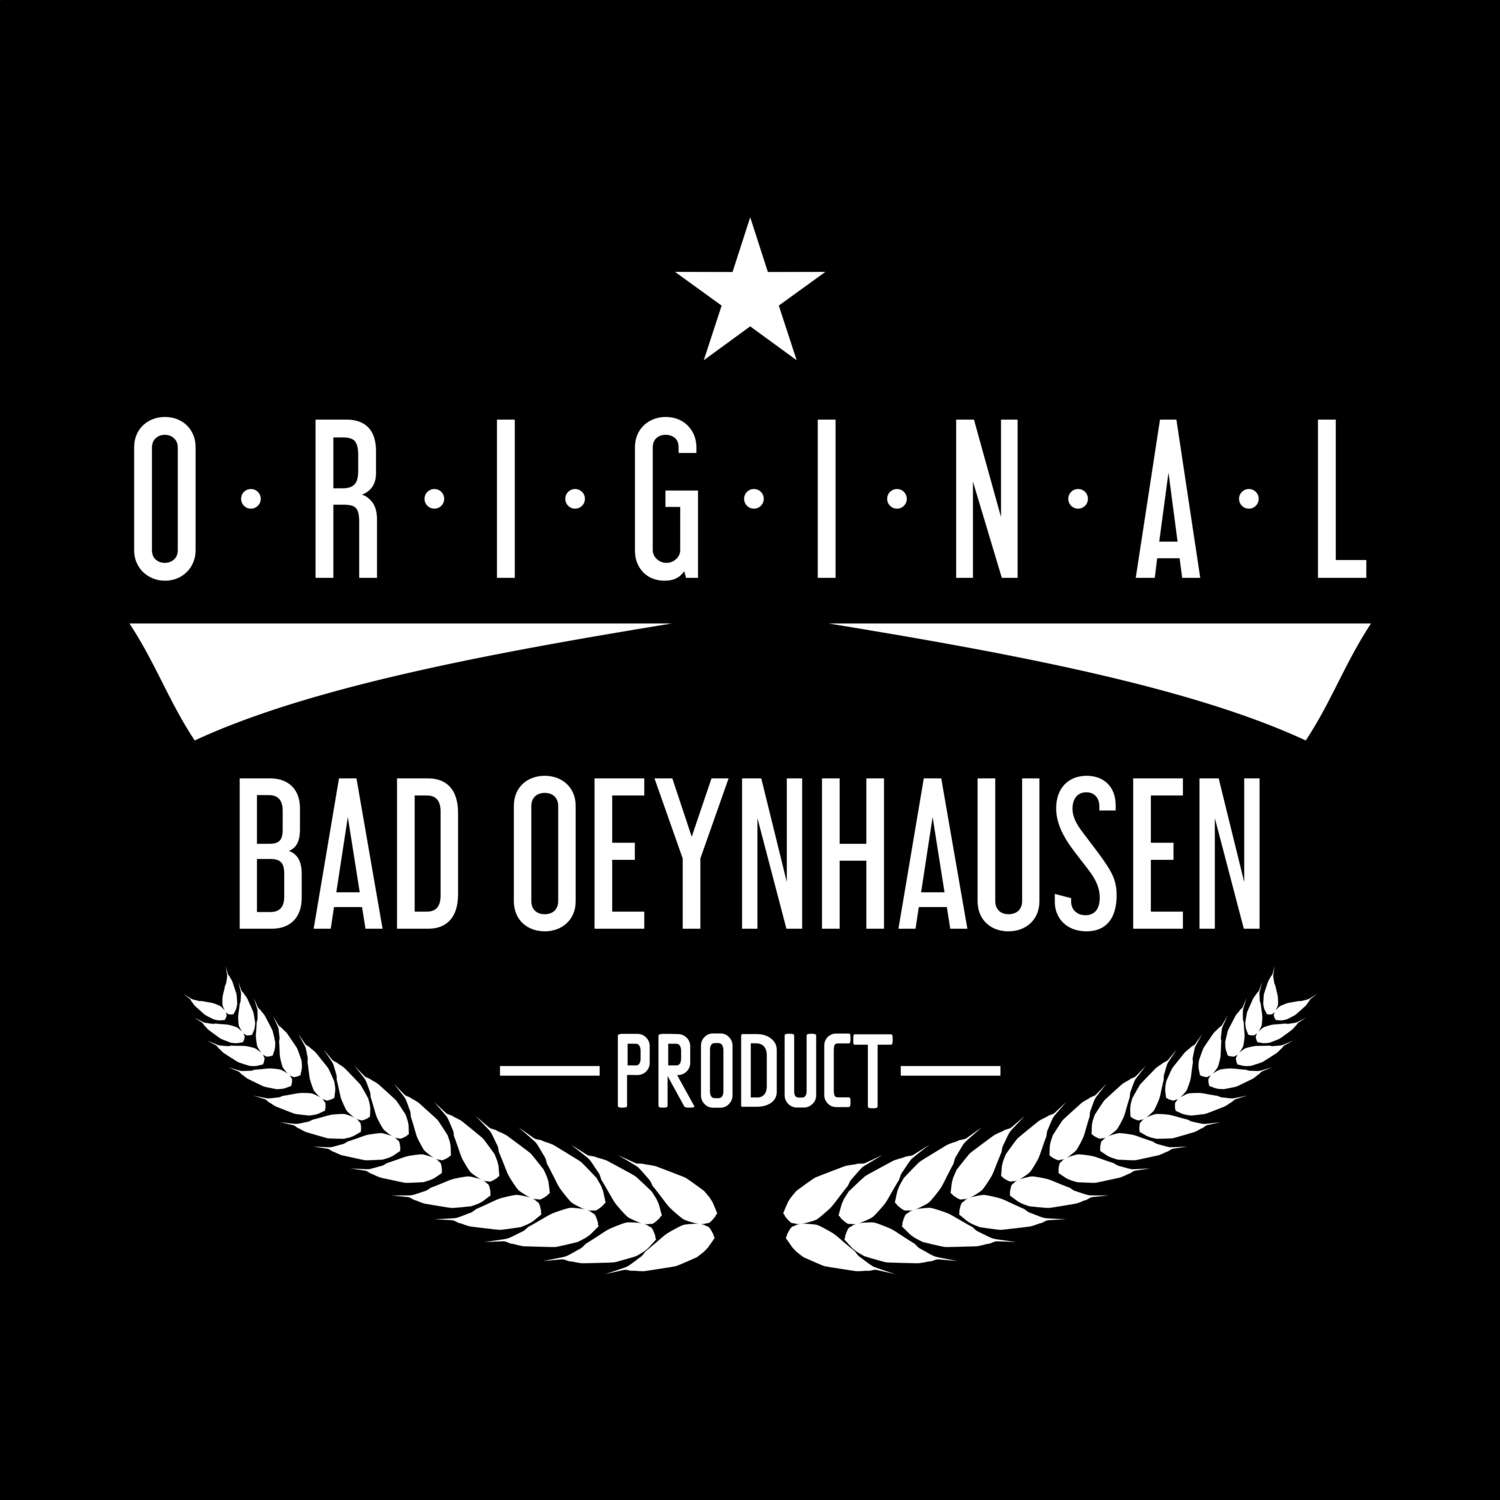 Bad Oeynhausen T-Shirt »Original Product«